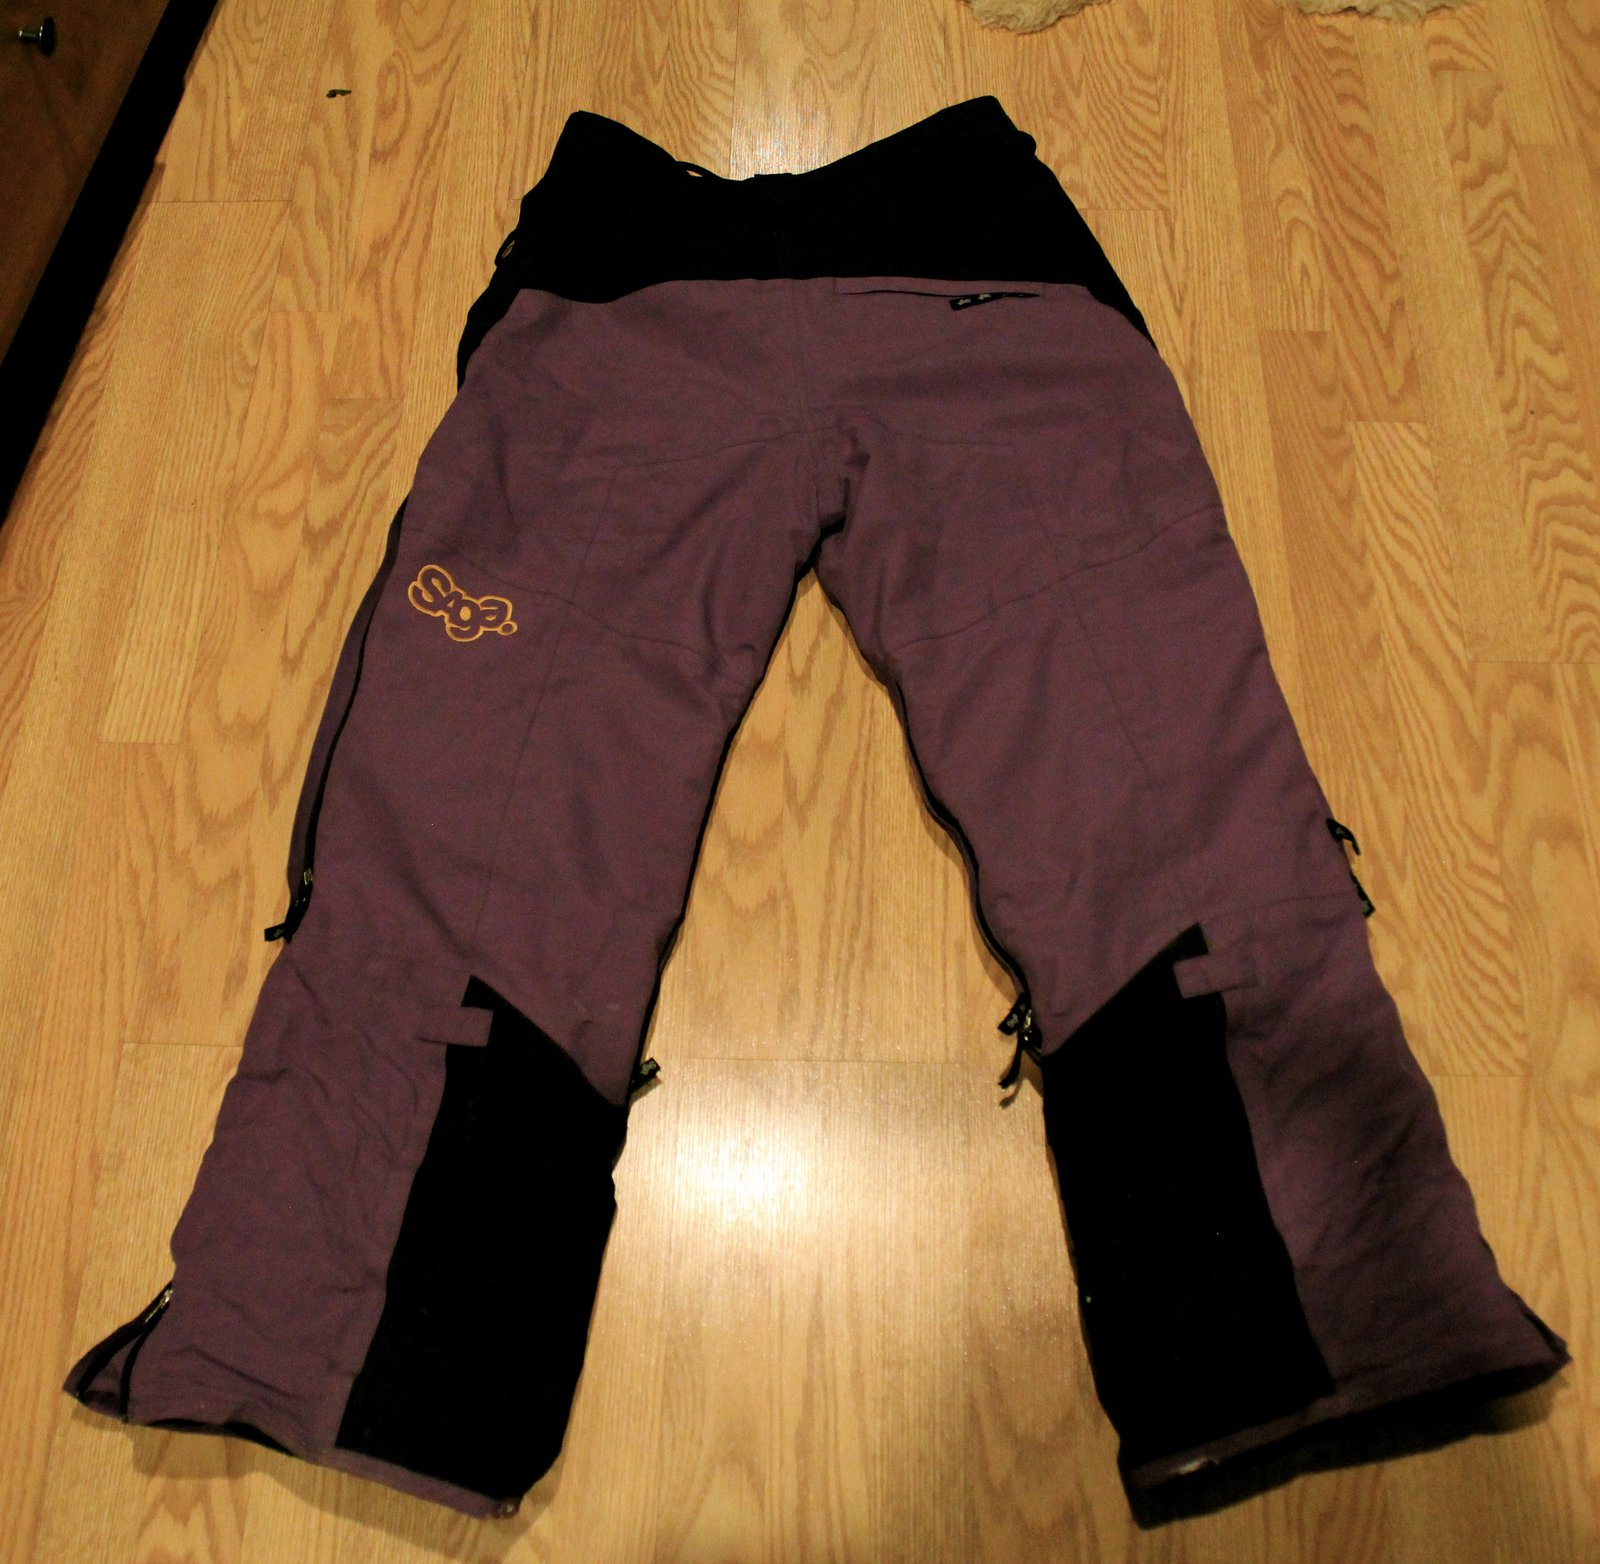 Saga pants L 80$ shipped